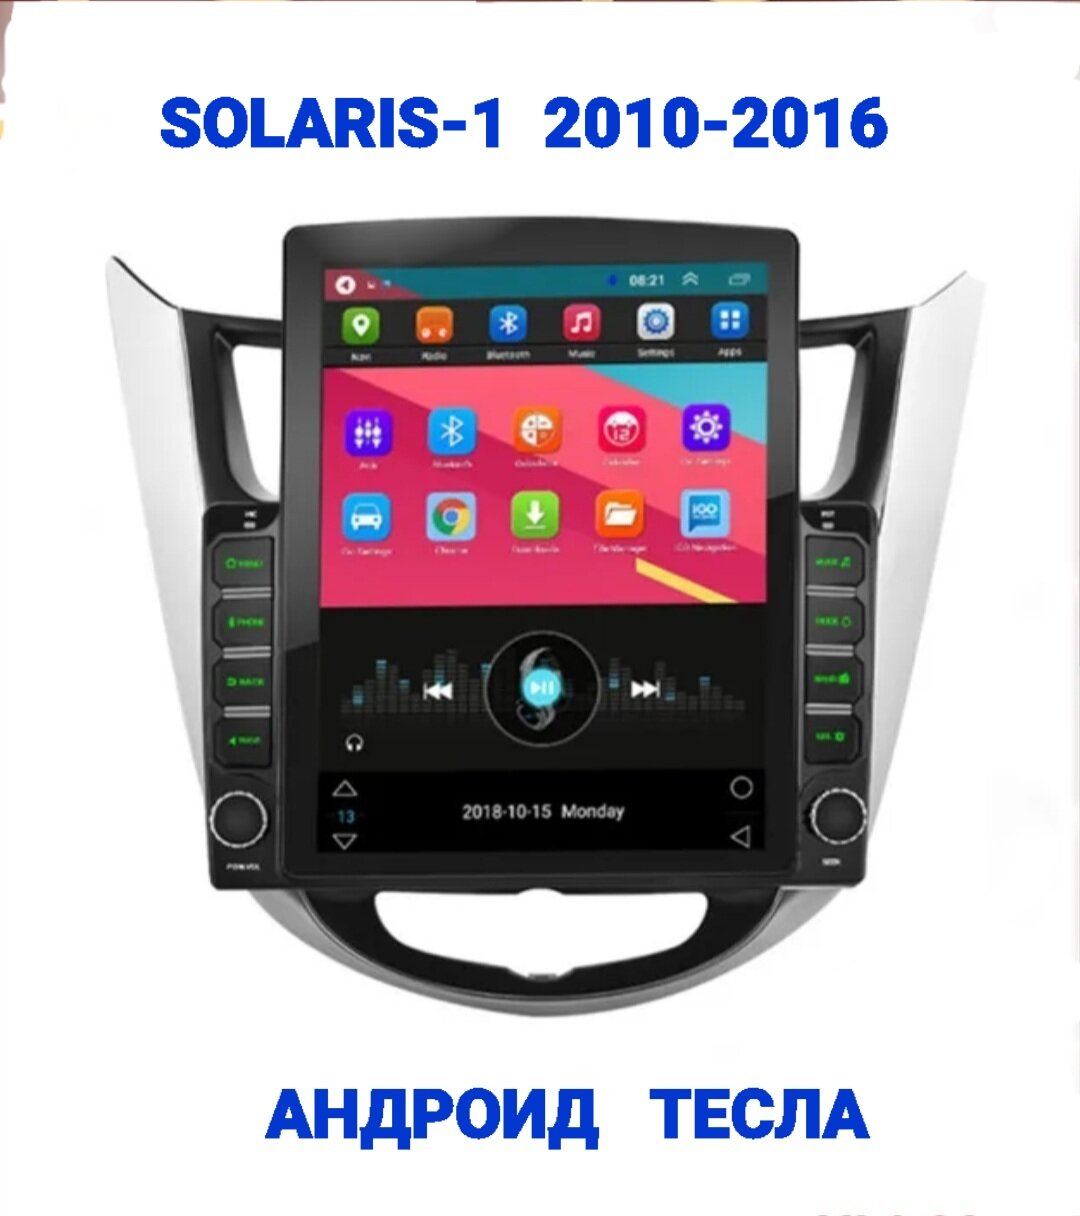 Магнитола Тесла Пионер (Tesla Pioneer) WiFi, GPS, USB, Блютуз, андроид 14 экран 10' для Хёндэ Солярис, Акцент (Hyundai Solaris, Accent) 2010-16г